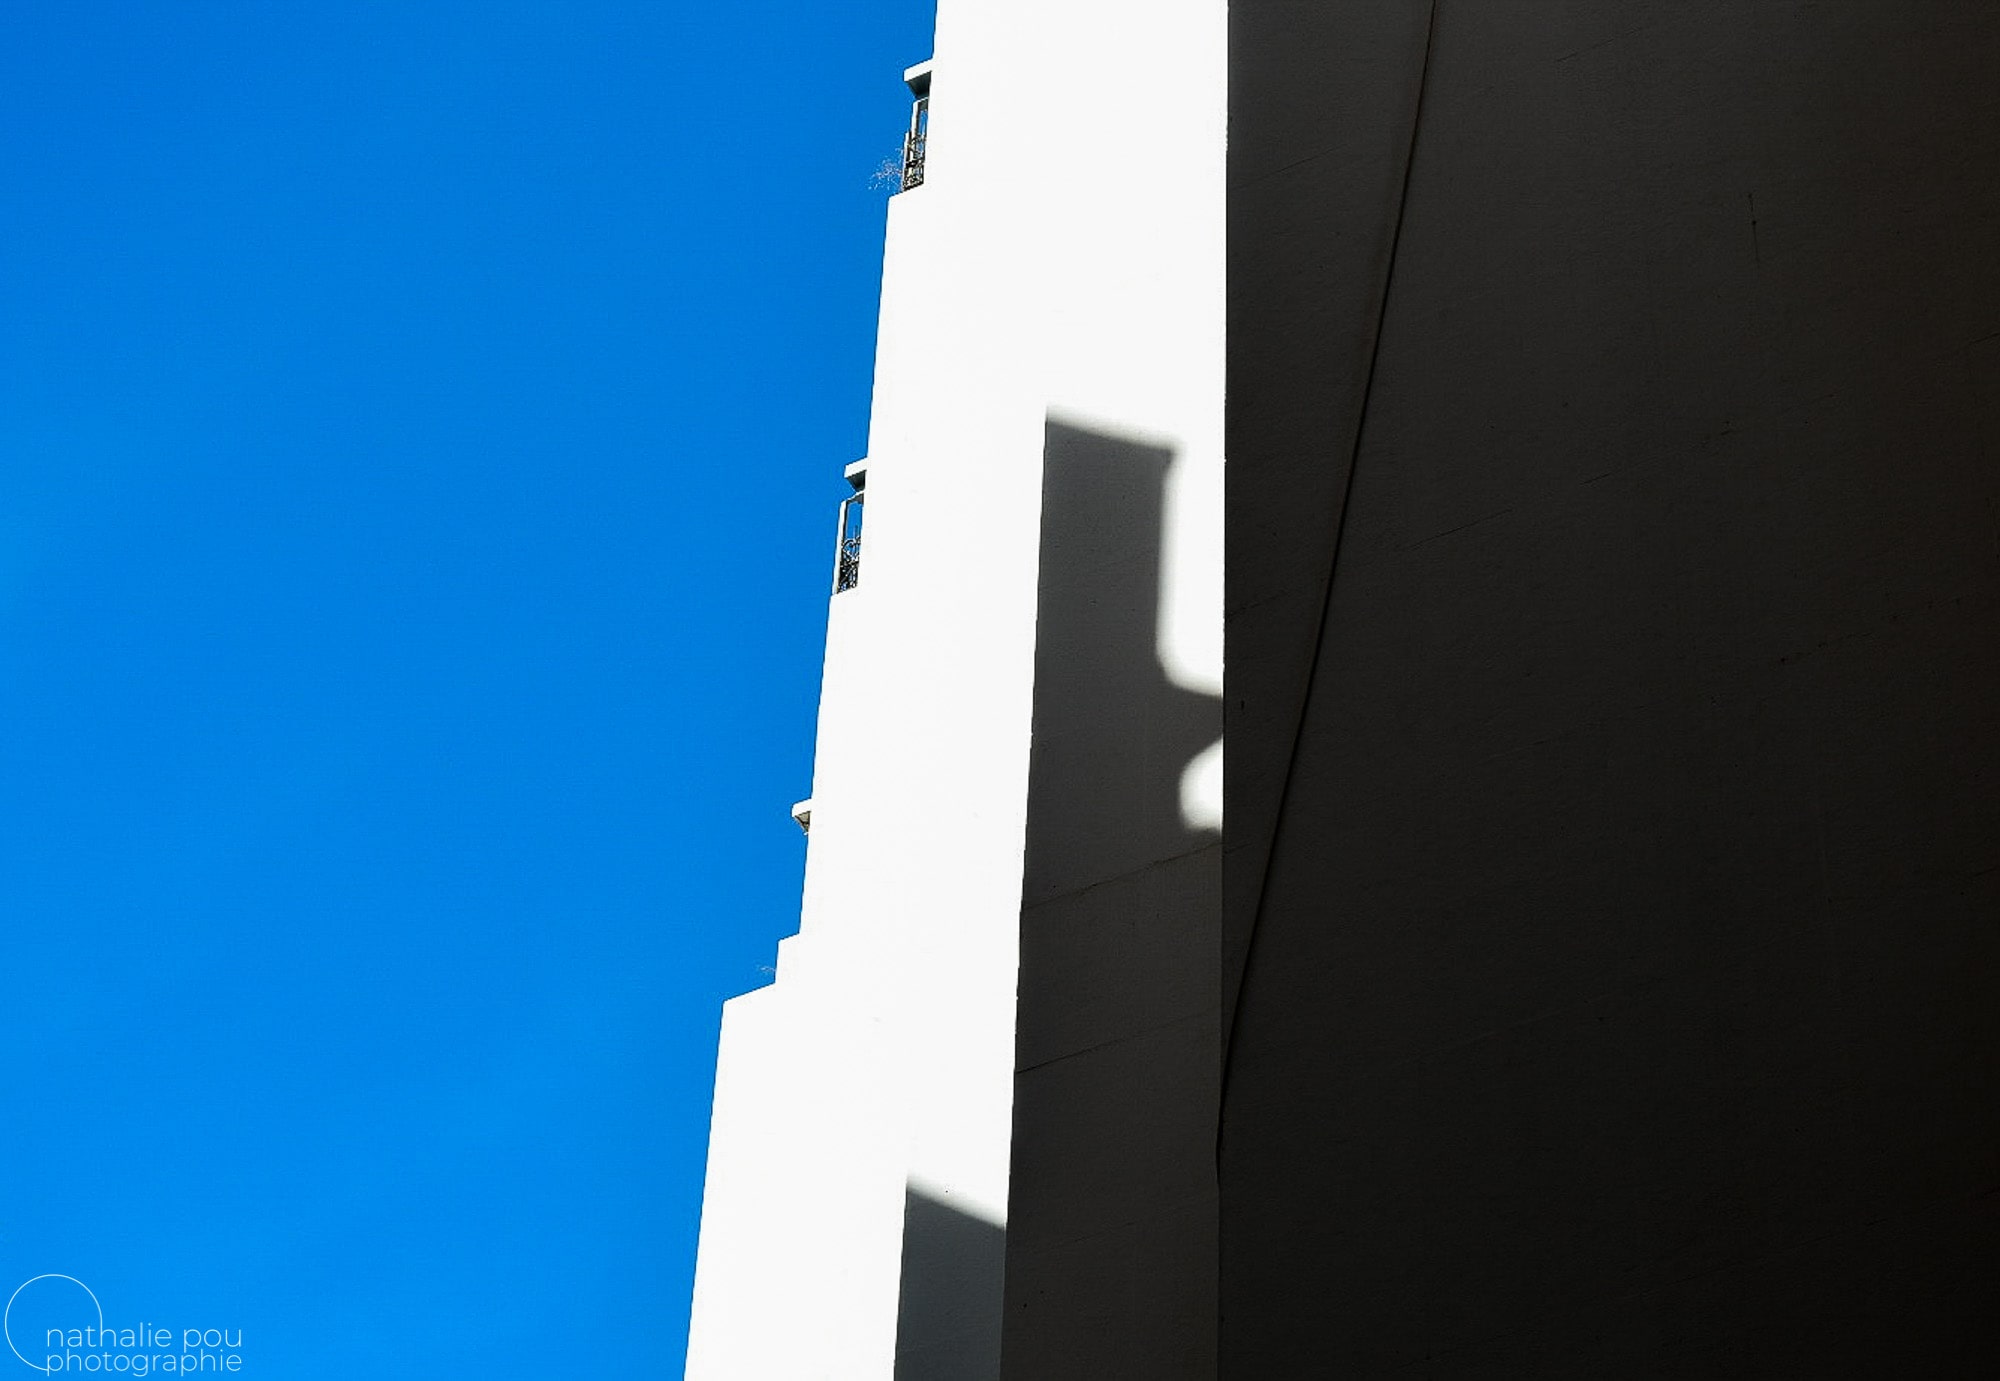 Photographe Architecture: Minimalisme Bleu blanc noir